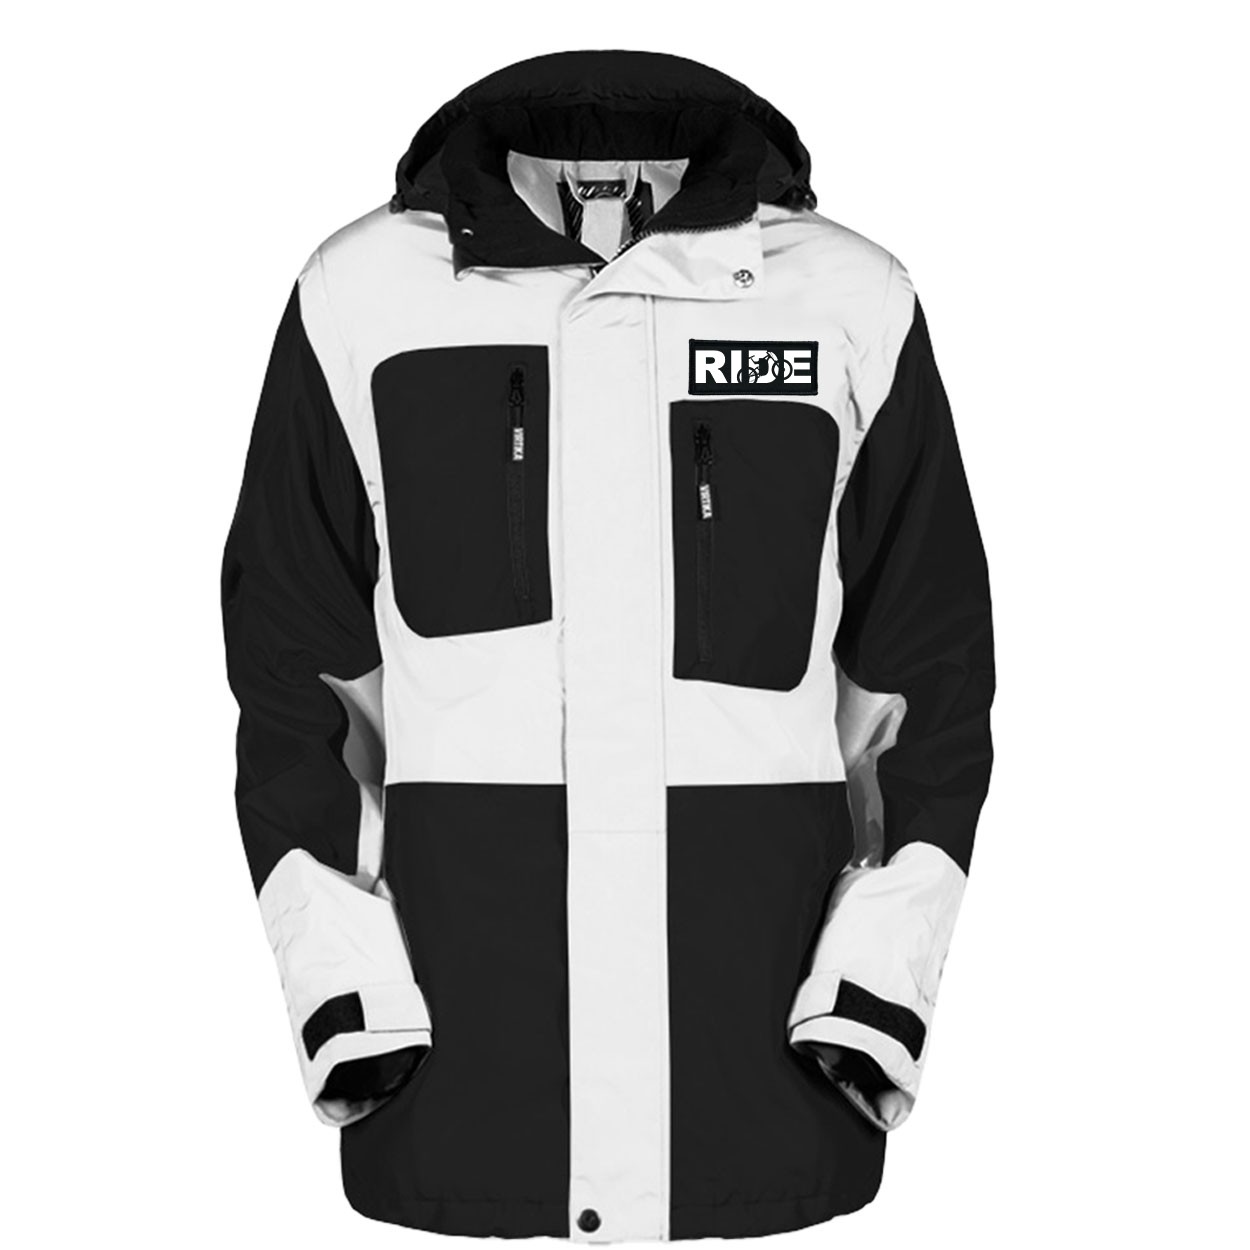 Ride MTB Logo Pro Waterproof Breathable Winter Virtika Jacket Black/White (White Logo)